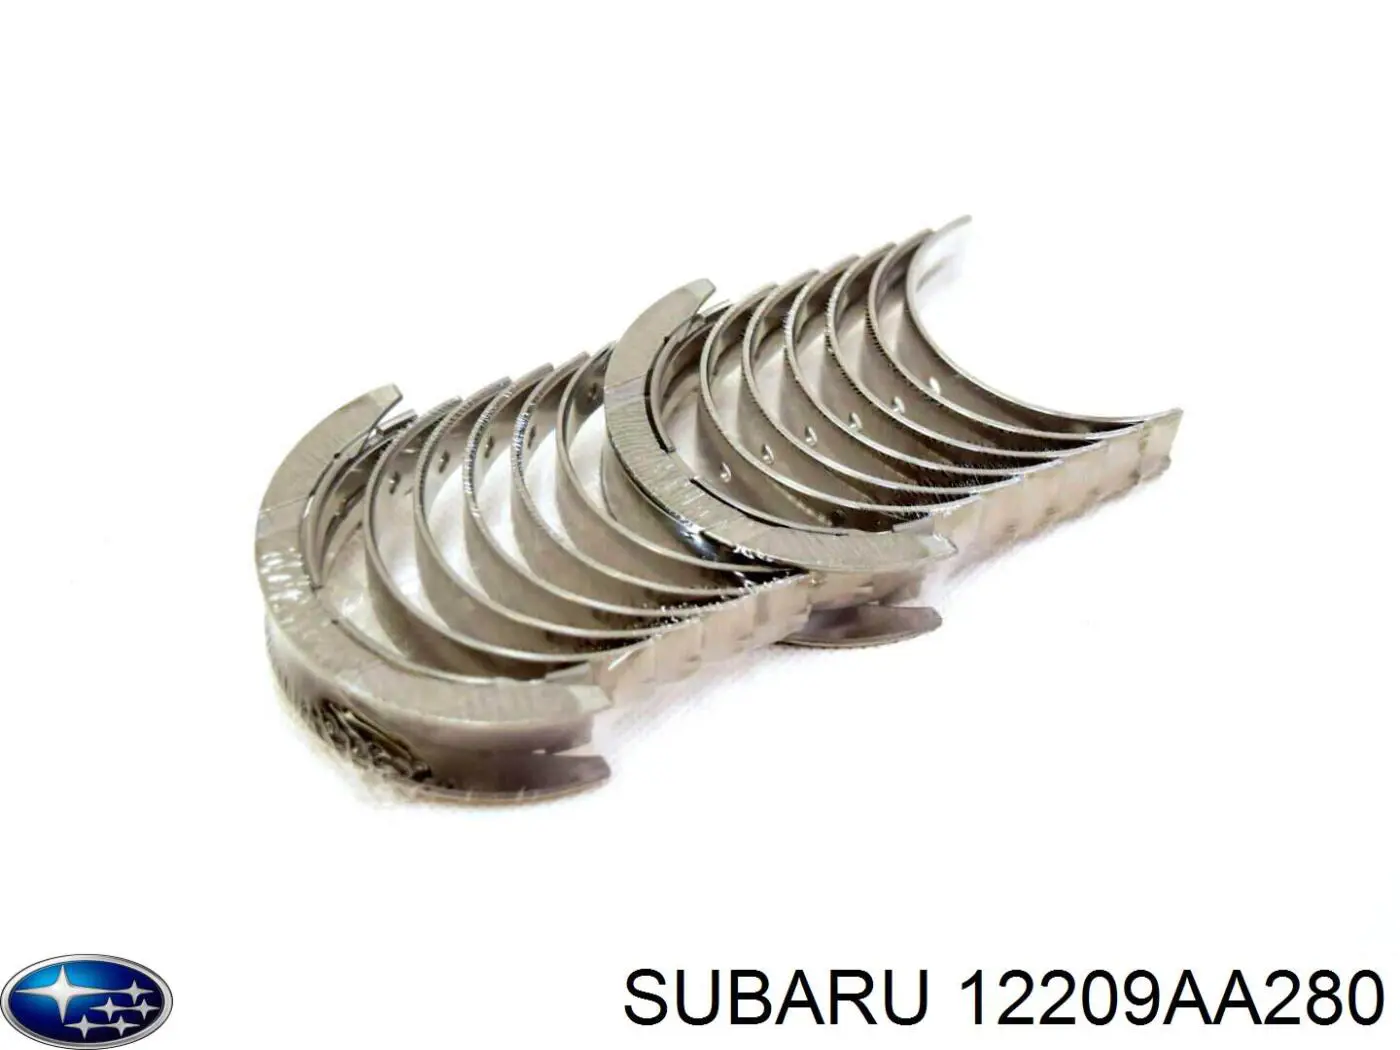 12209AA280 Subaru вкладыши коленвала коренные, комплект, стандарт (std)